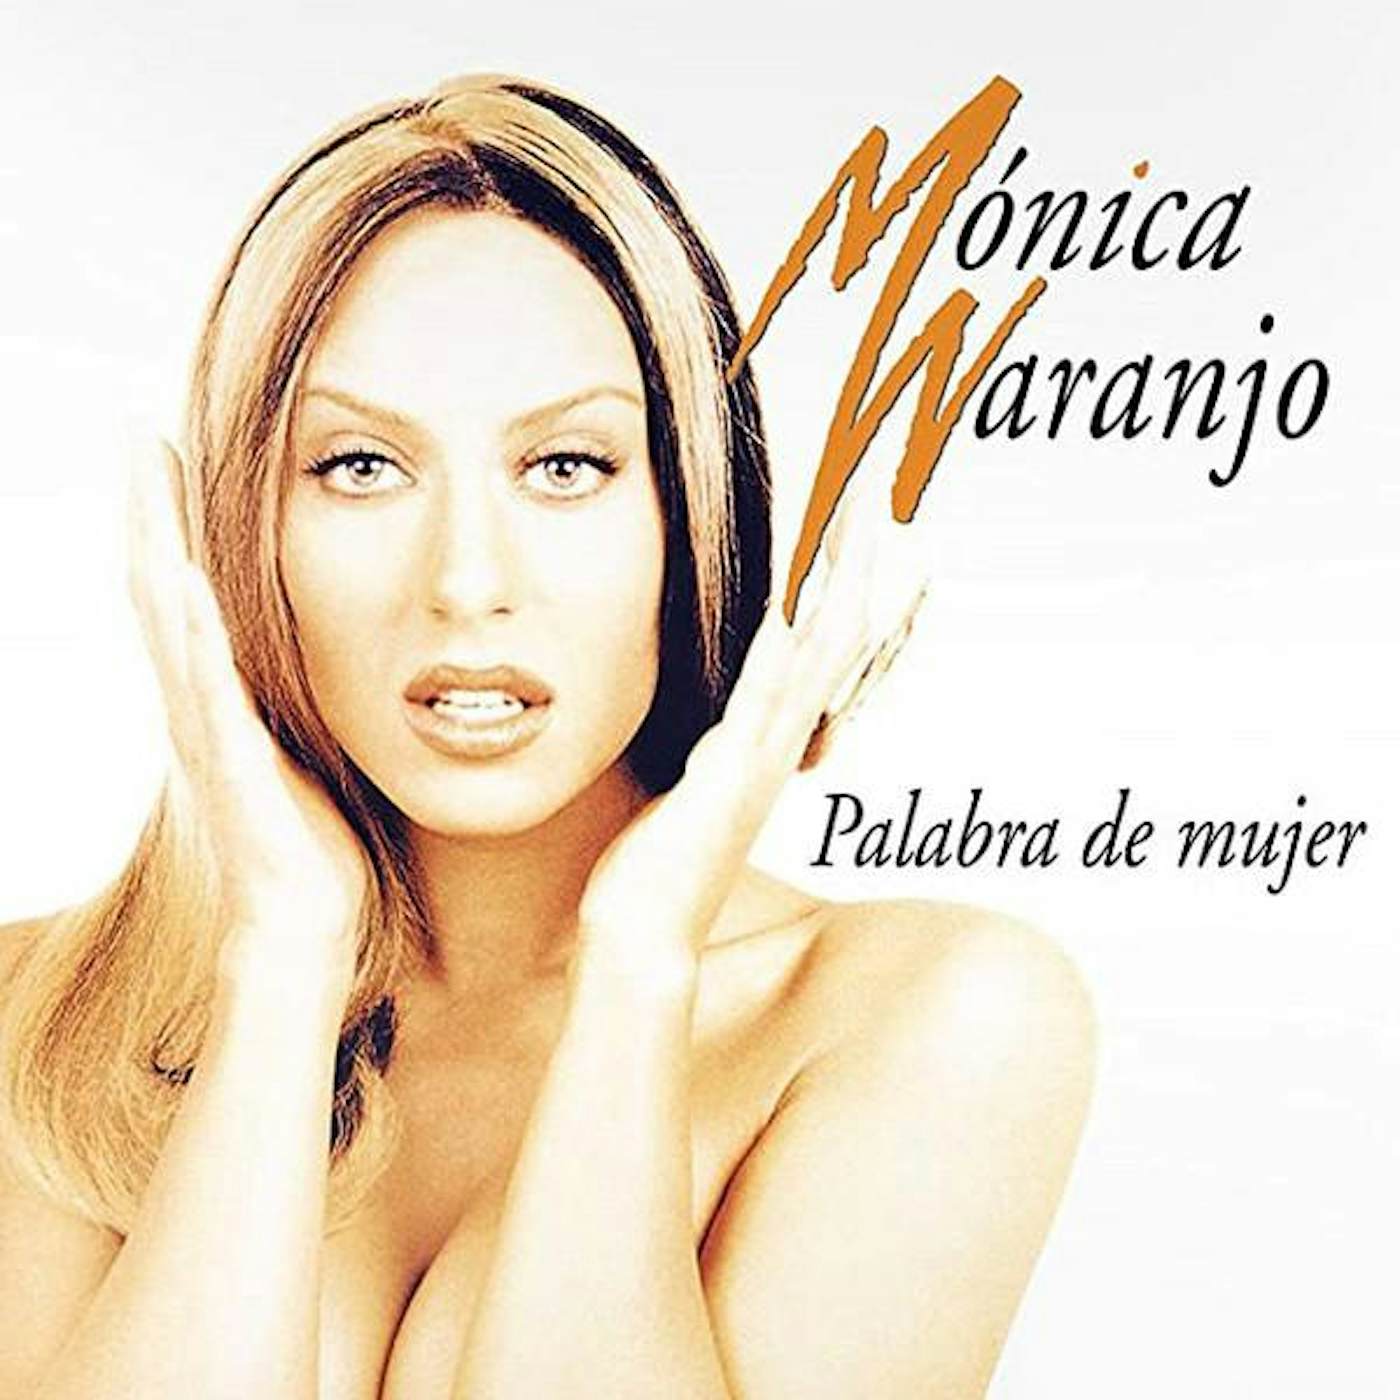 Monica Naranjo PALABRA DE MUJER Vinyl Record